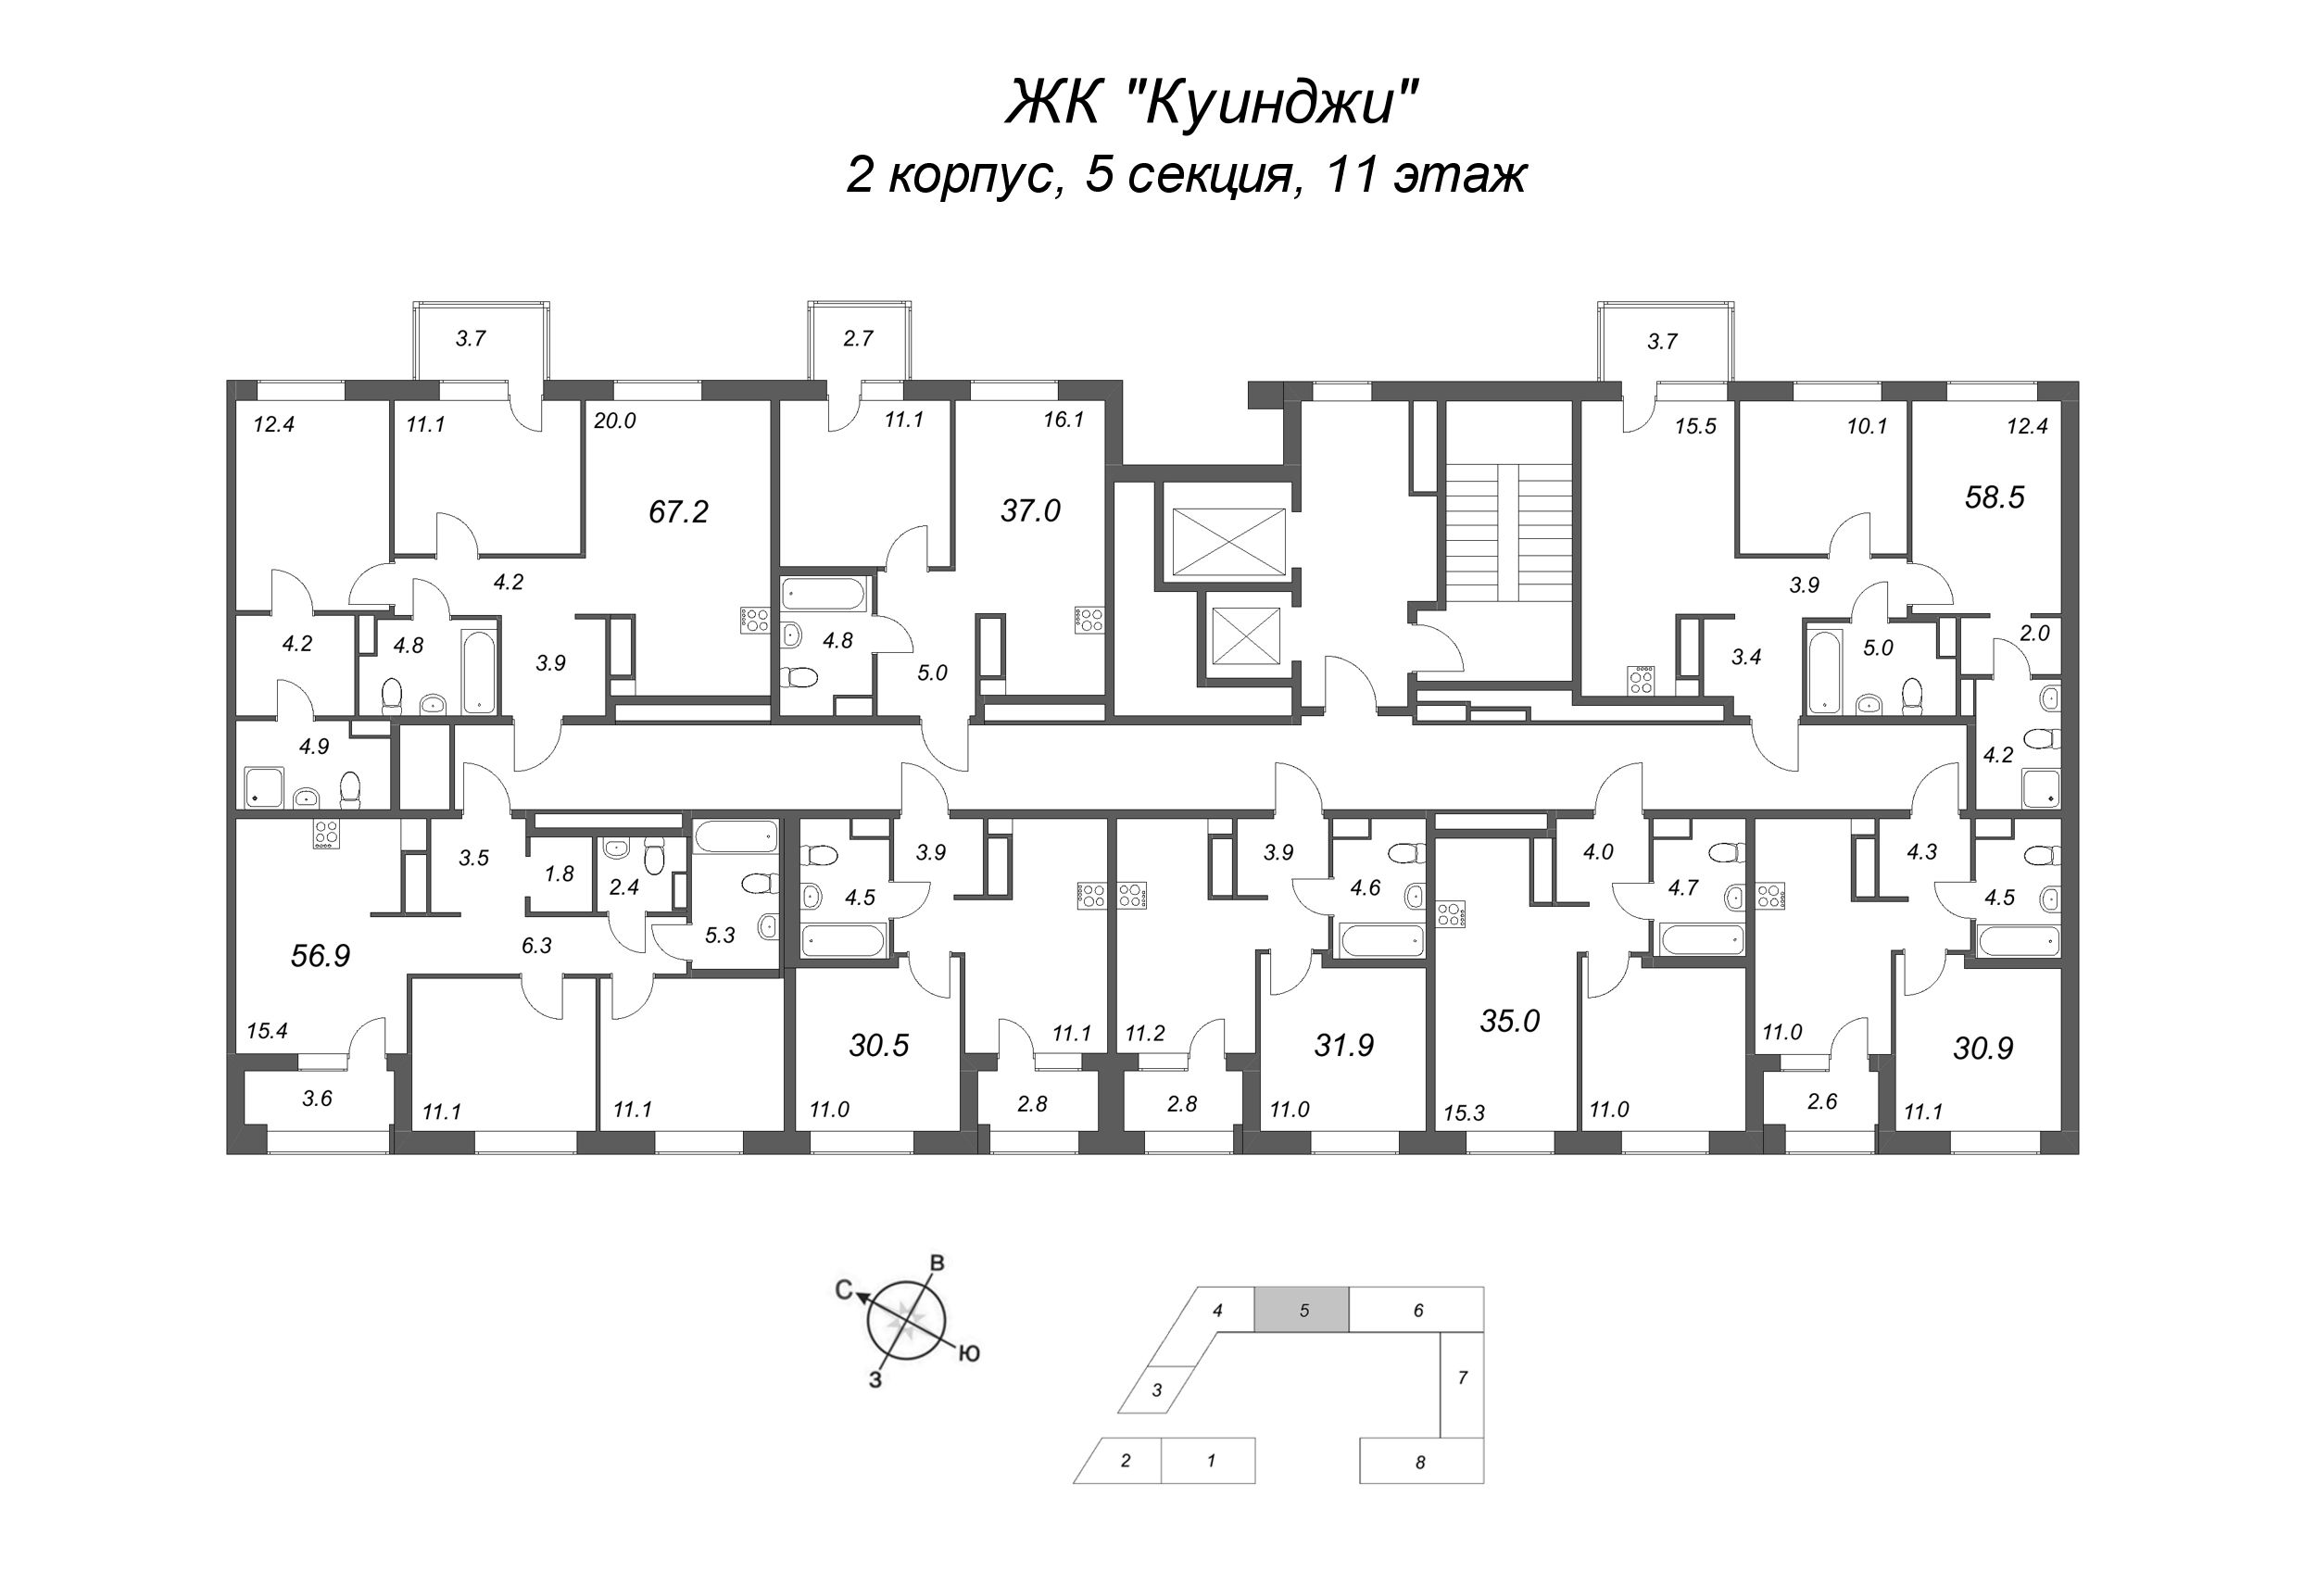 3-комнатная (Евро) квартира, 58.5 м² - планировка этажа